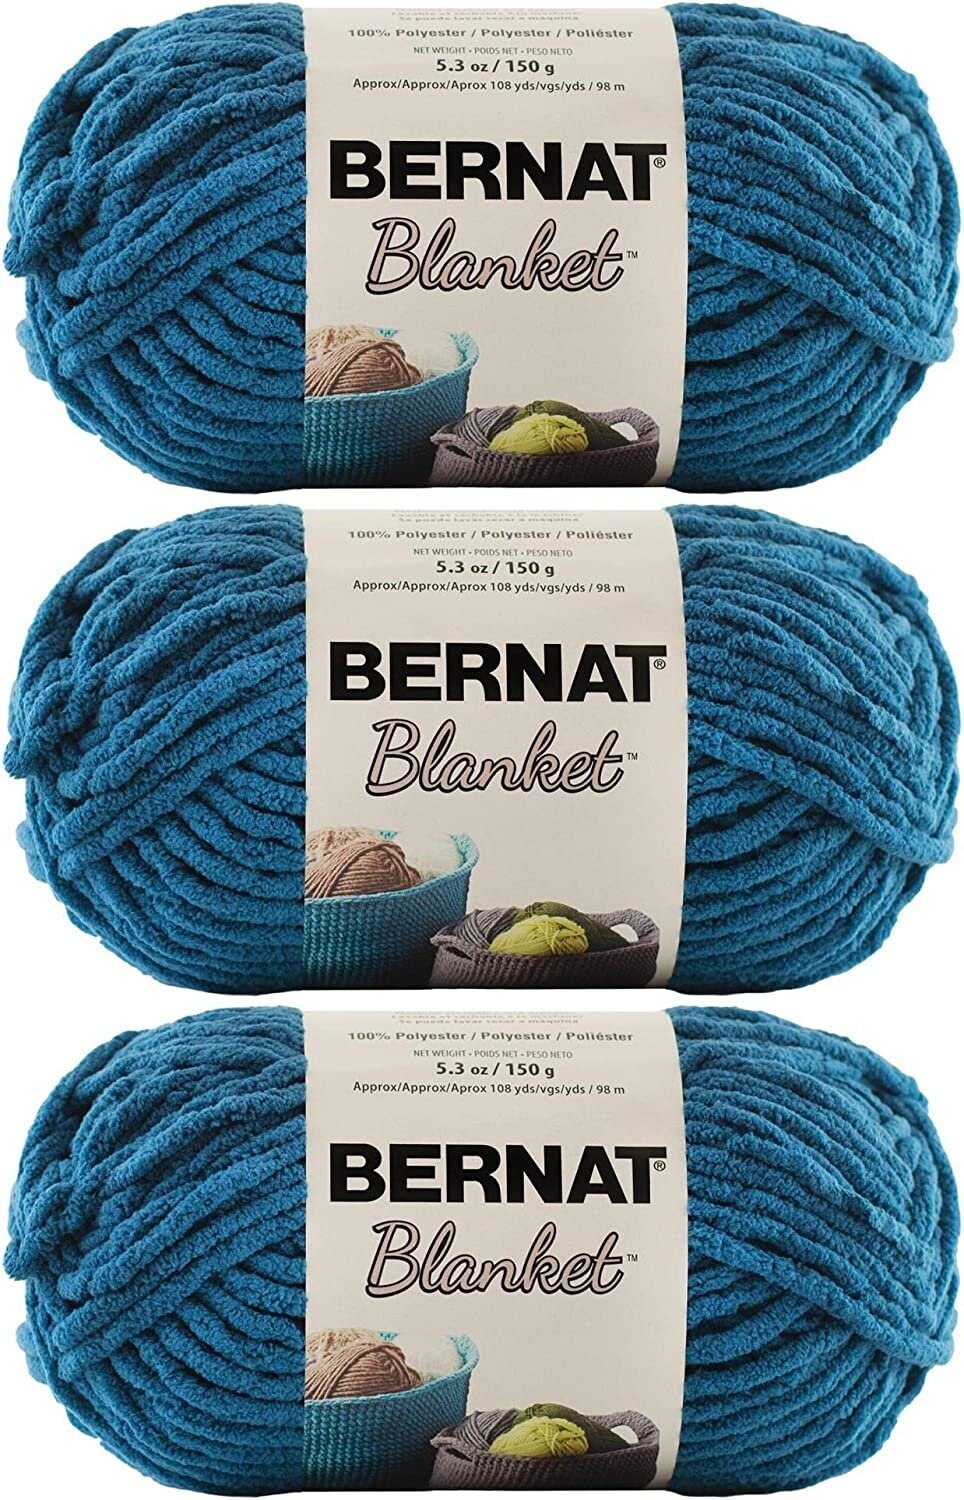 Super Bulky #6 3-Pack Royal Blue Bulk Buy: Bernat Blanket Yarn 5.3 Ounce 108 Yards Per Skein Solids and Ombres 